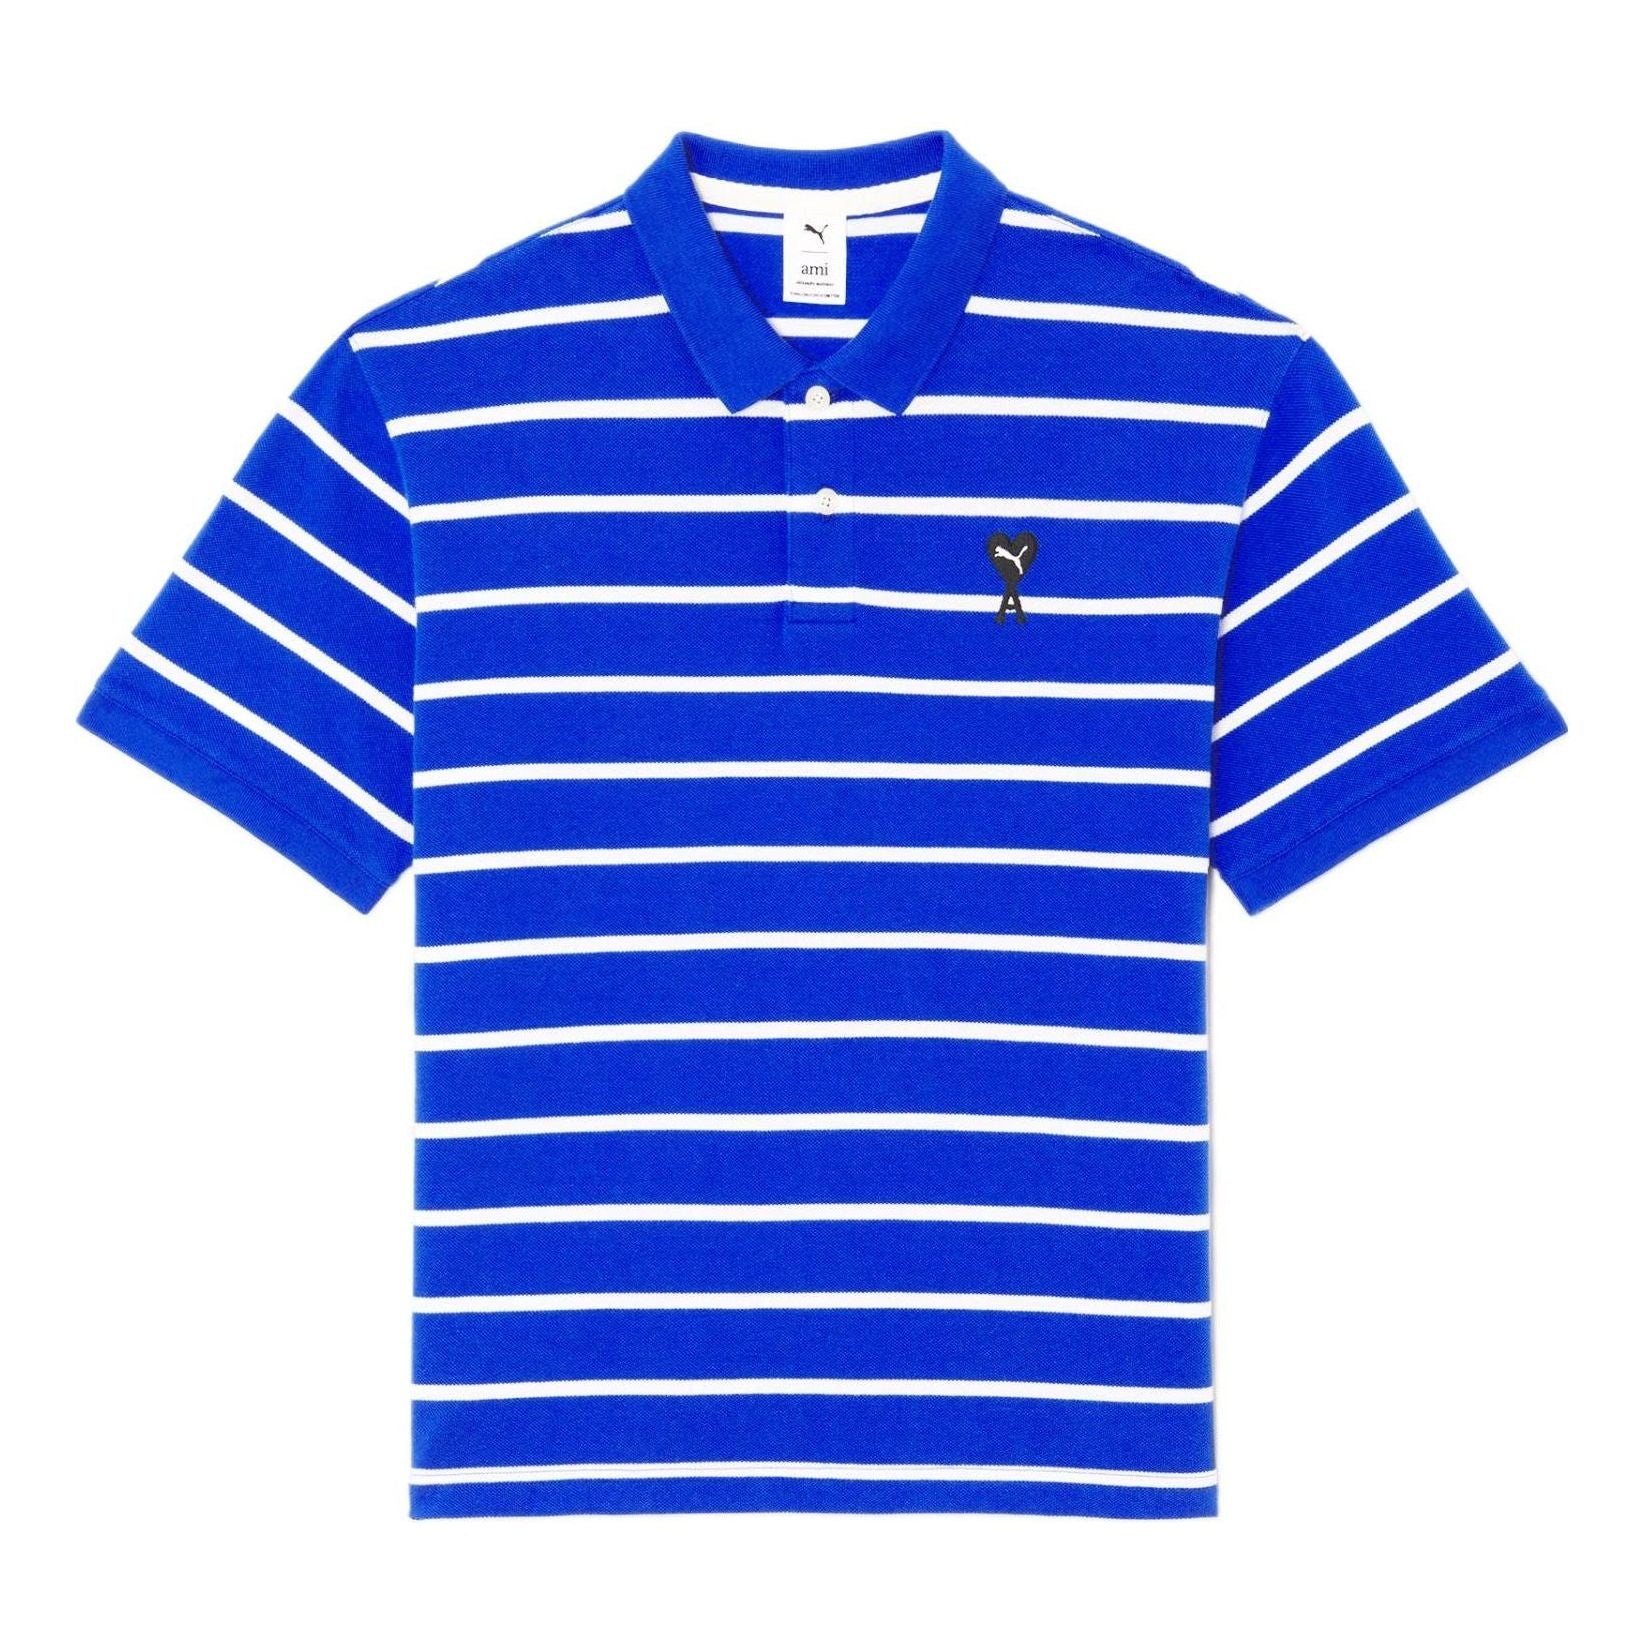 PUMA X AMI Short Sleeve Polo Shirt 'Blue' 534067-93 - 1